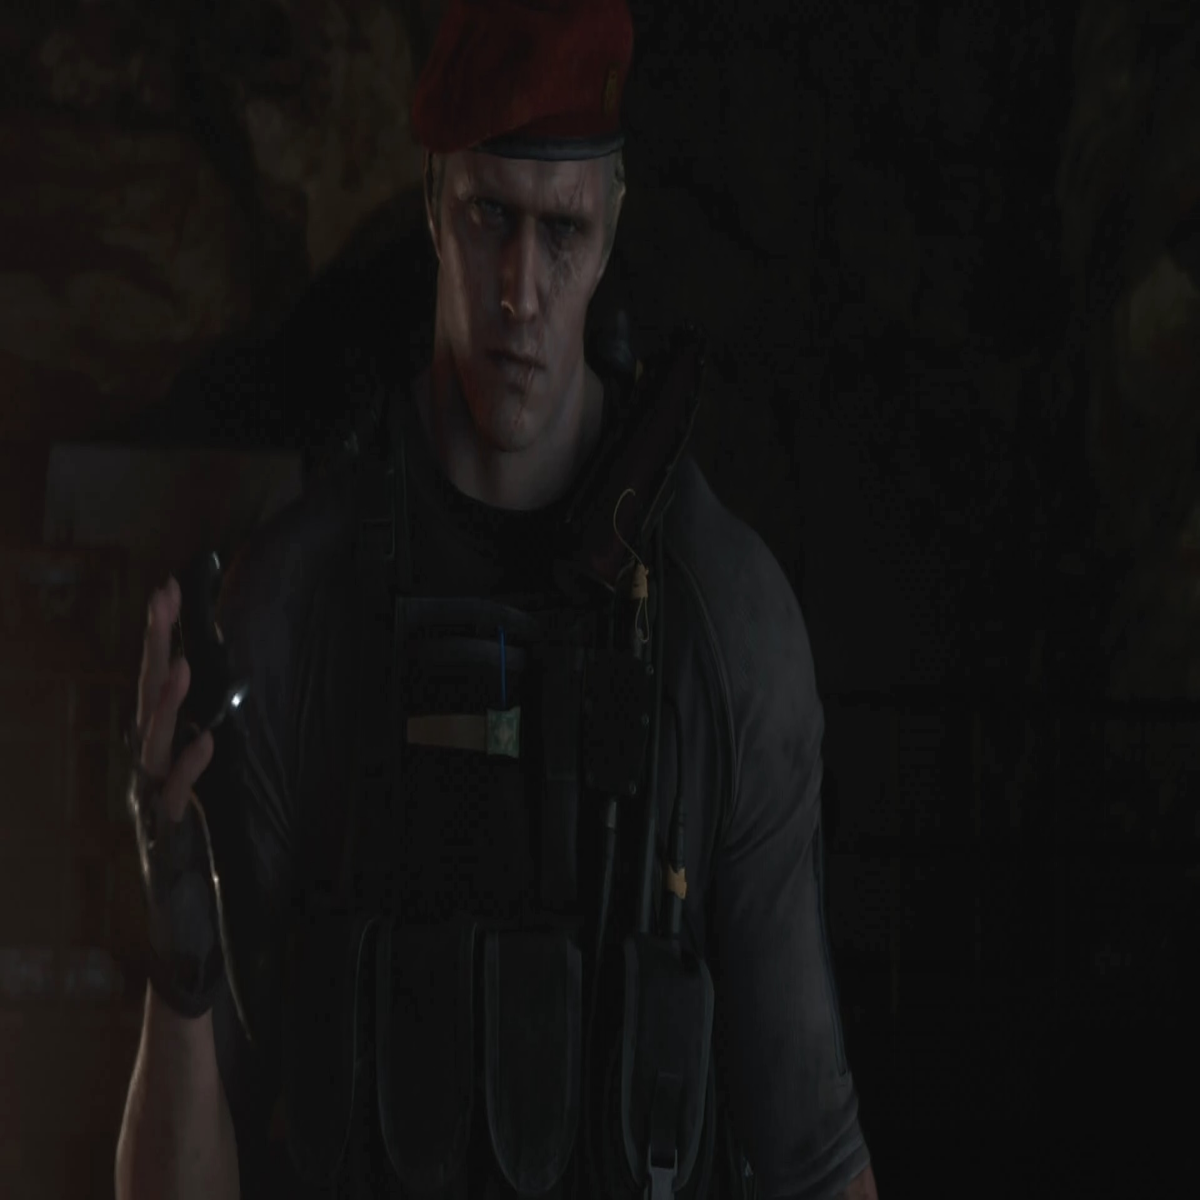 Resident Evil 4 Remake: How to Beat Krauser